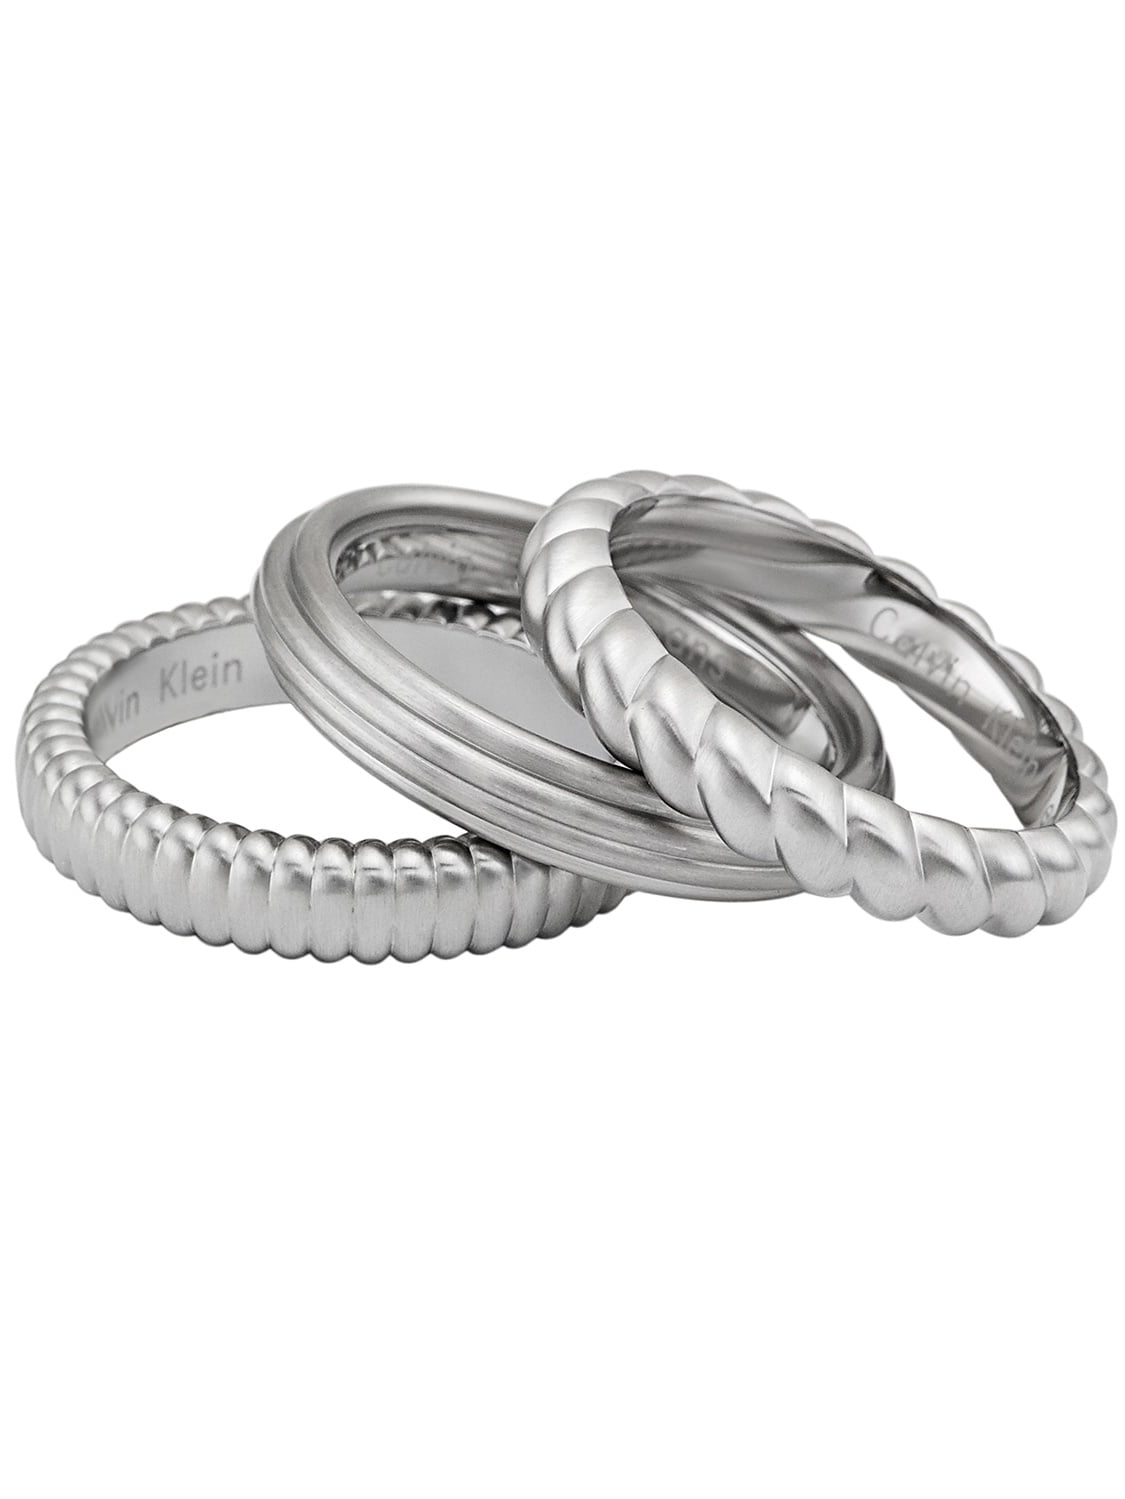 Calvin Klein Jeans Jewelry Waves Silver Size 6 Ring KJ17AR010206 -  